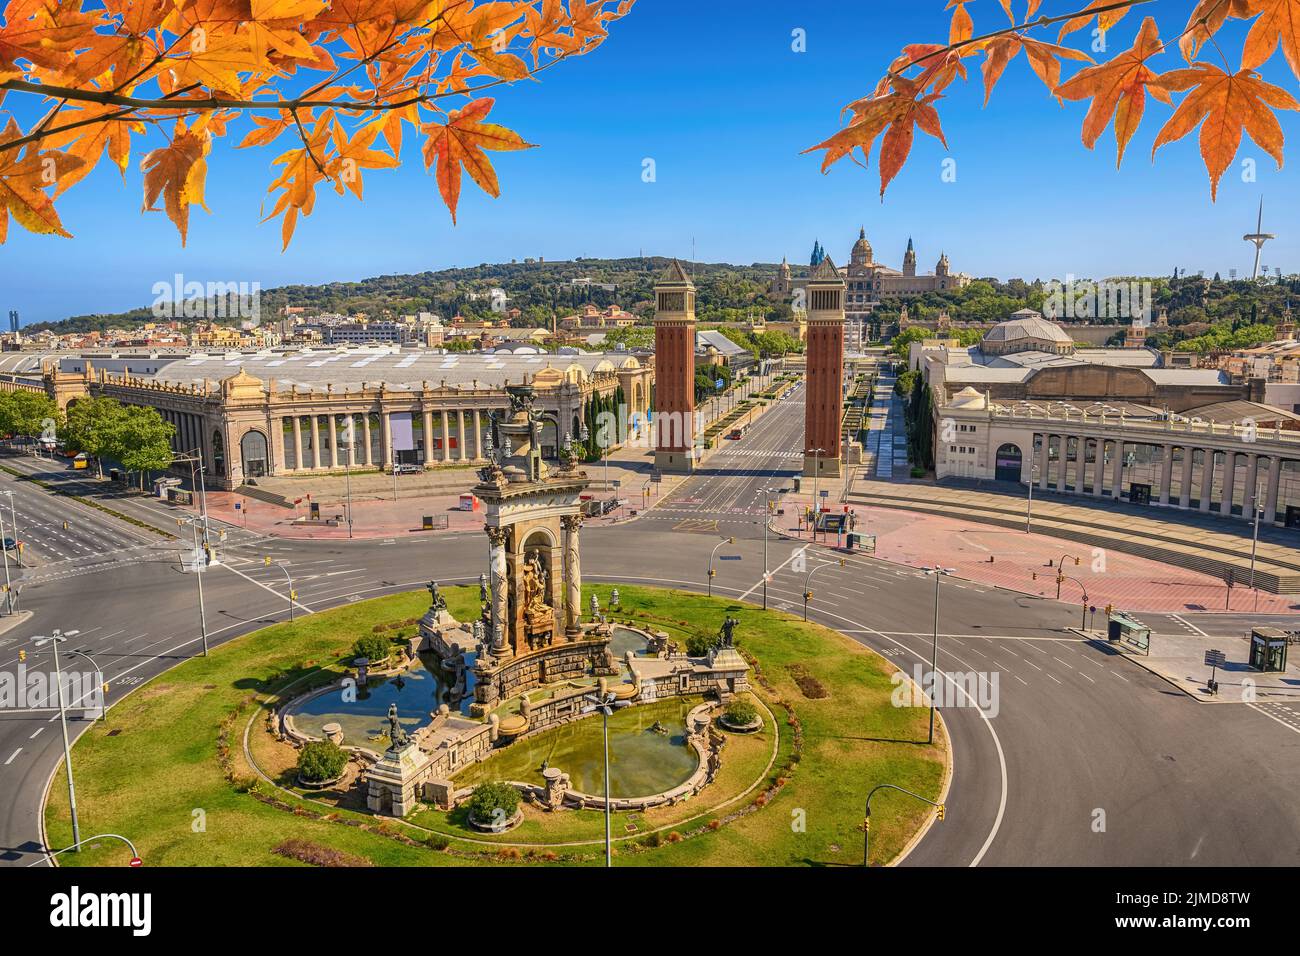 Barcelona Spain, city skyline at Barcelona Espanya Square with autumn leaf foliage Stock Photo